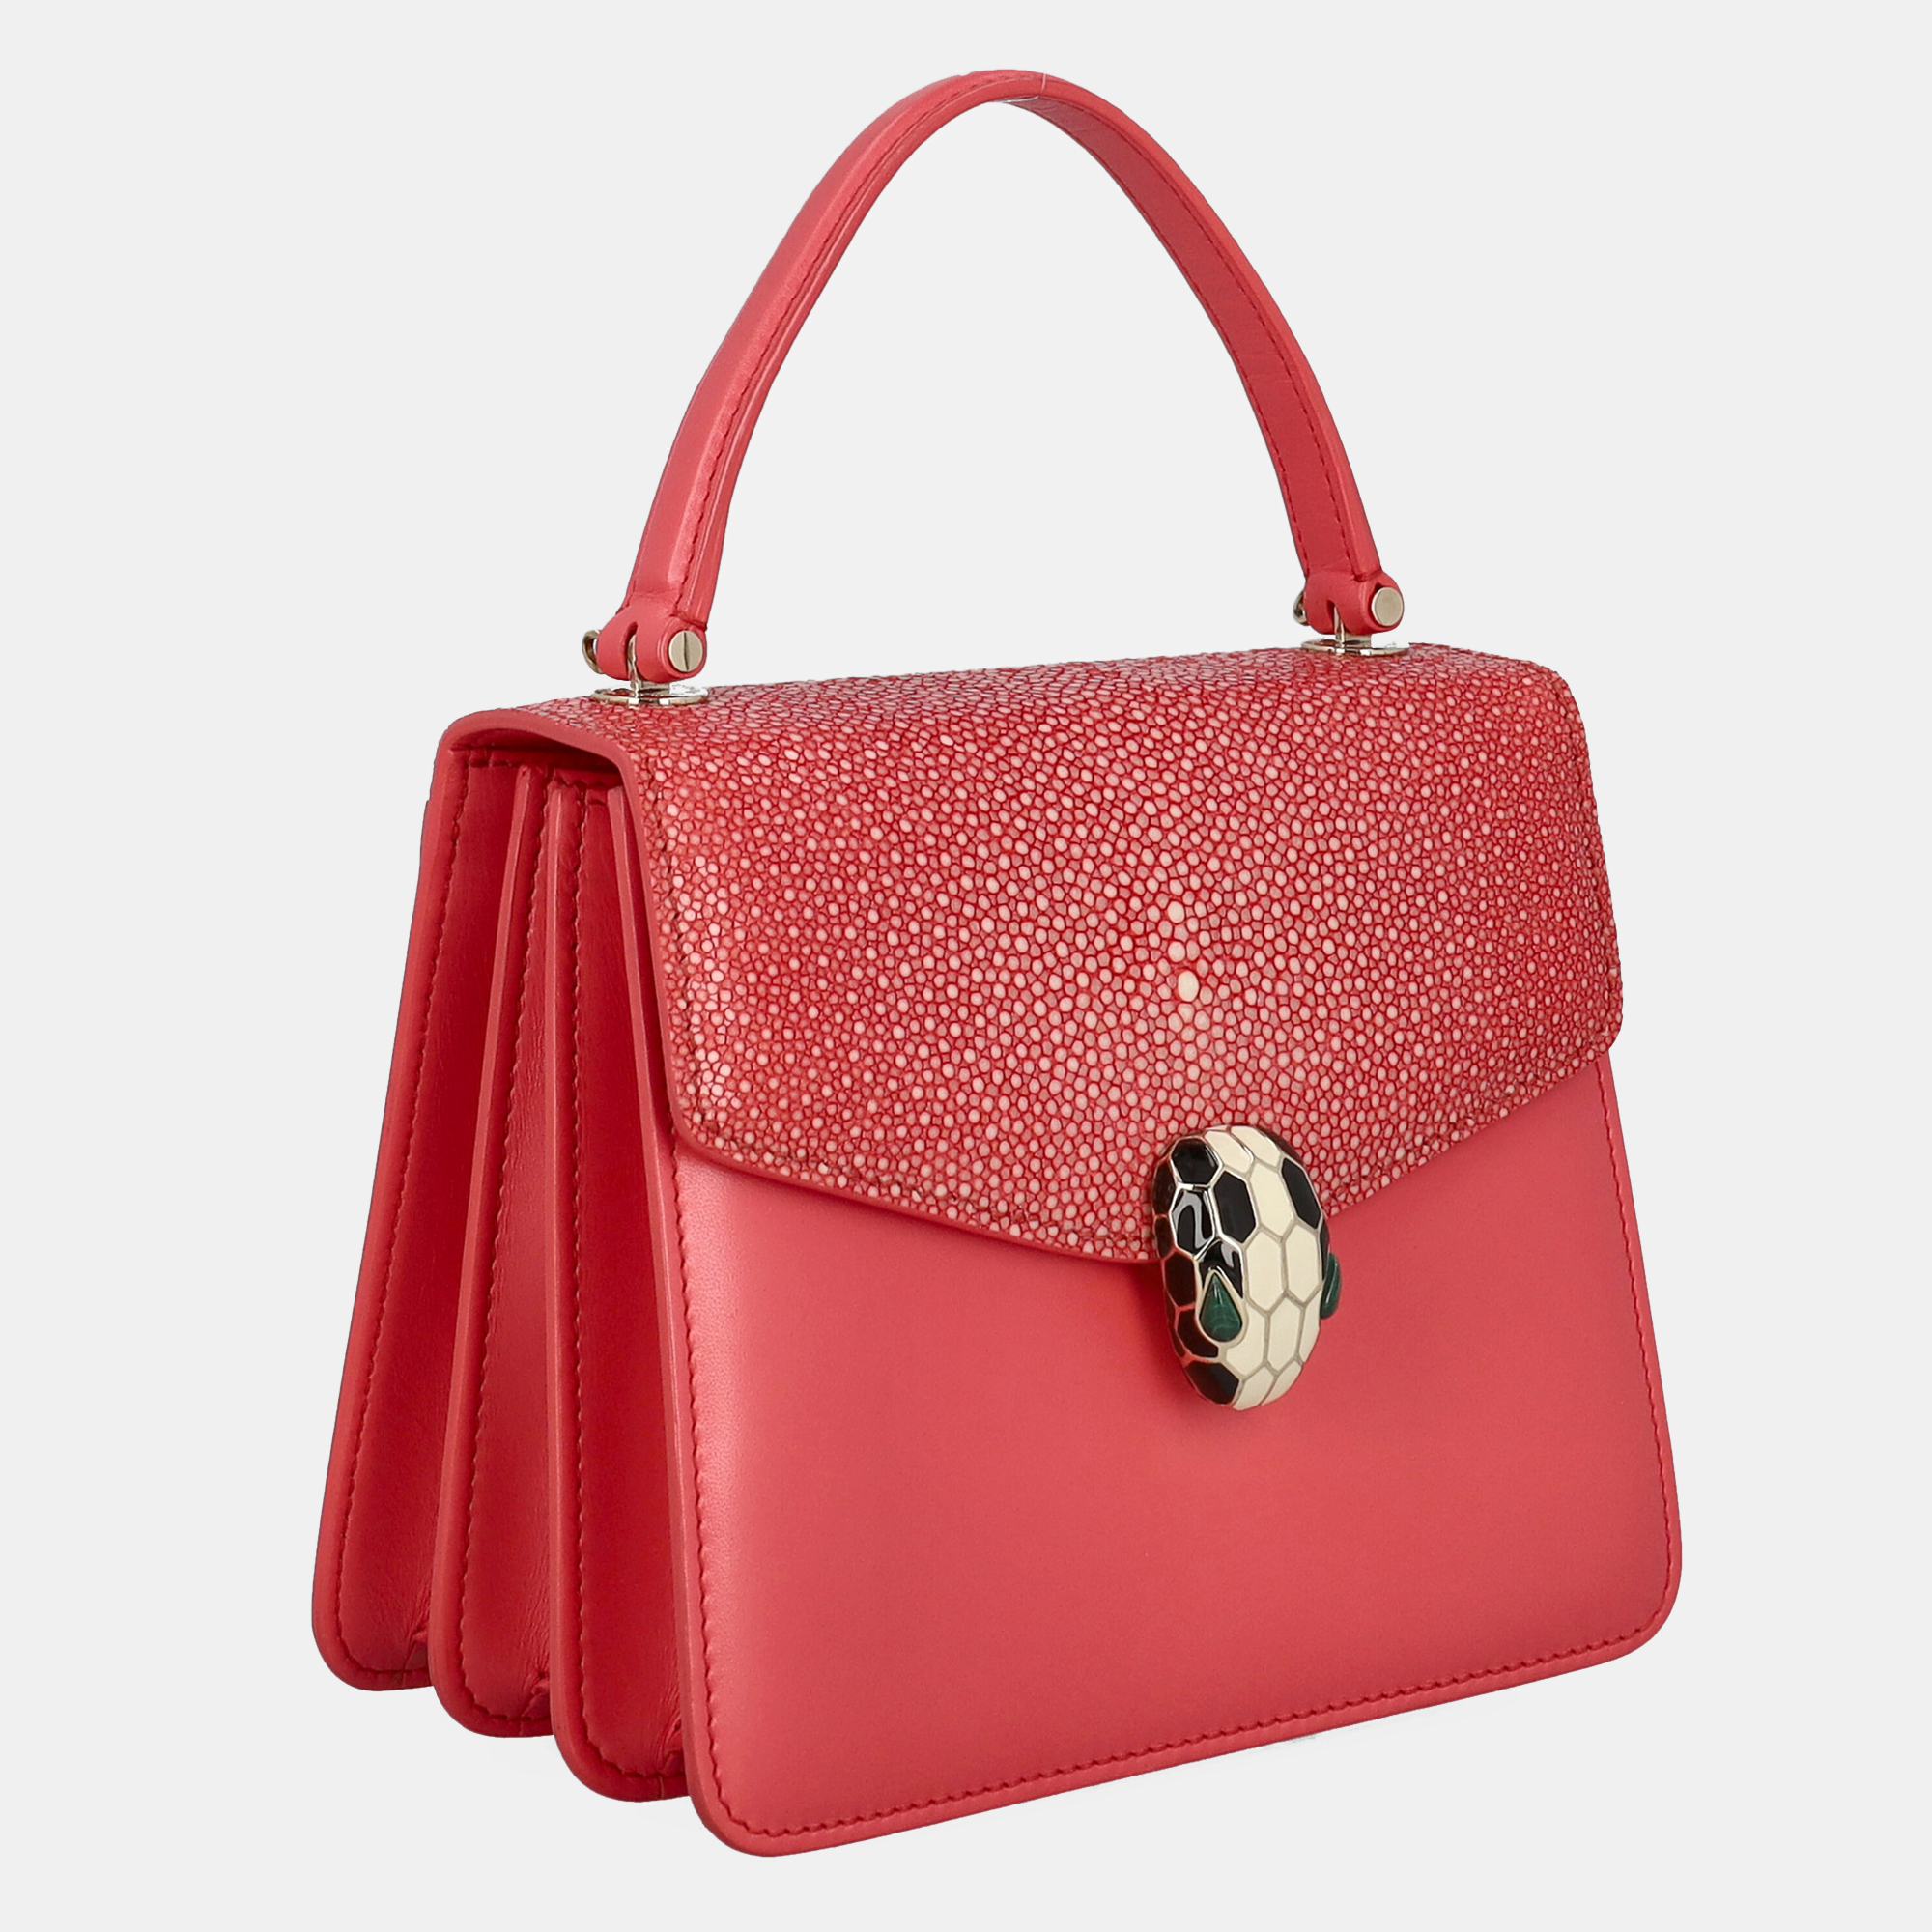 Bvlgari Serpenti -  Women's Leather Handbag - Pink - One Size